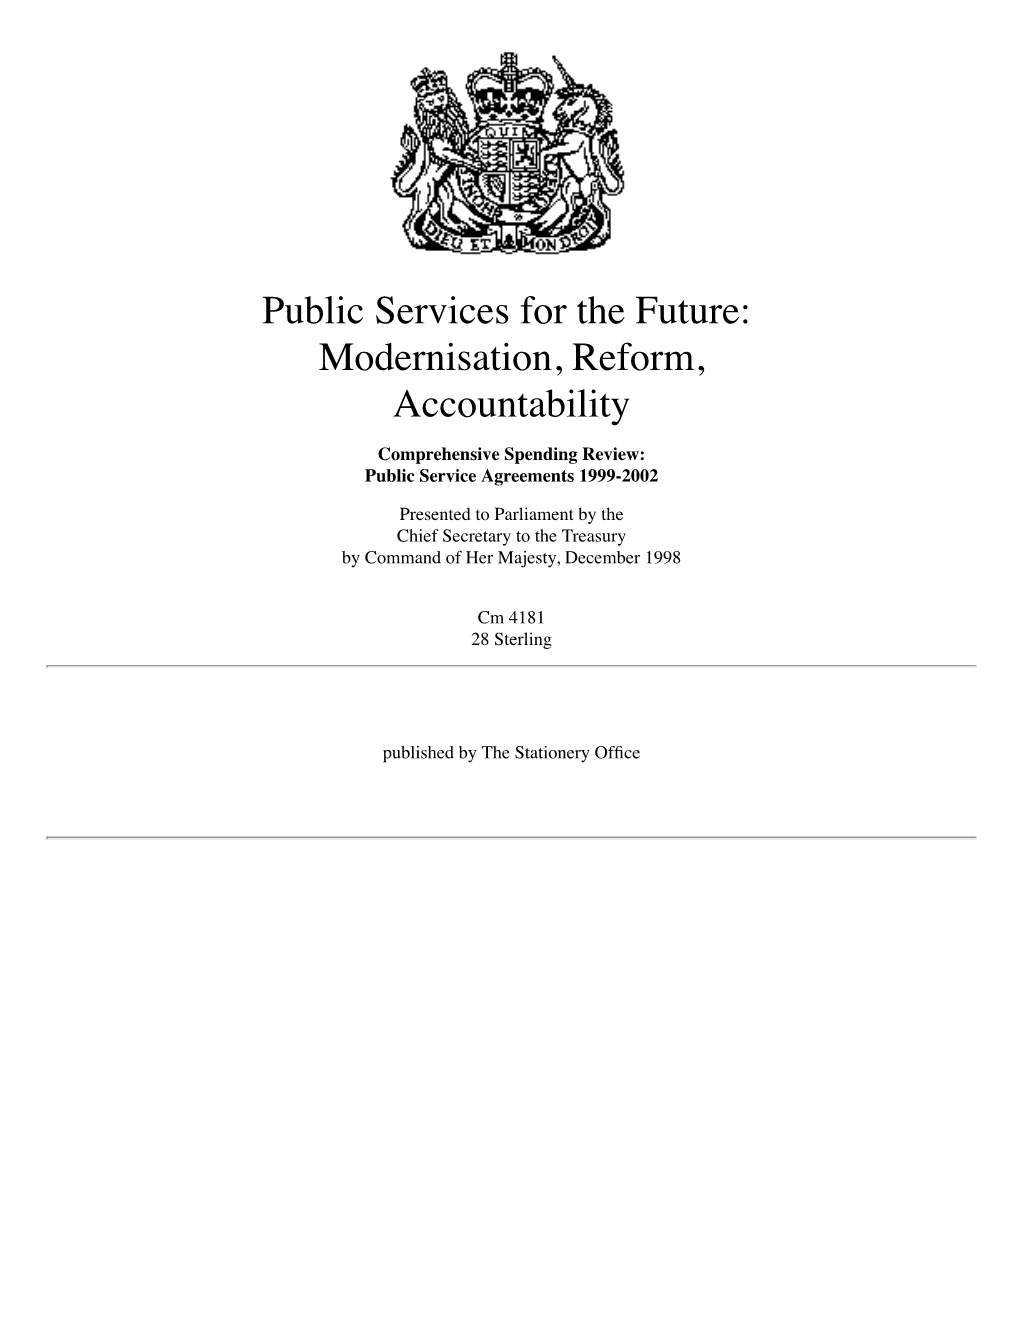 Modernisation, Reform, Accountability